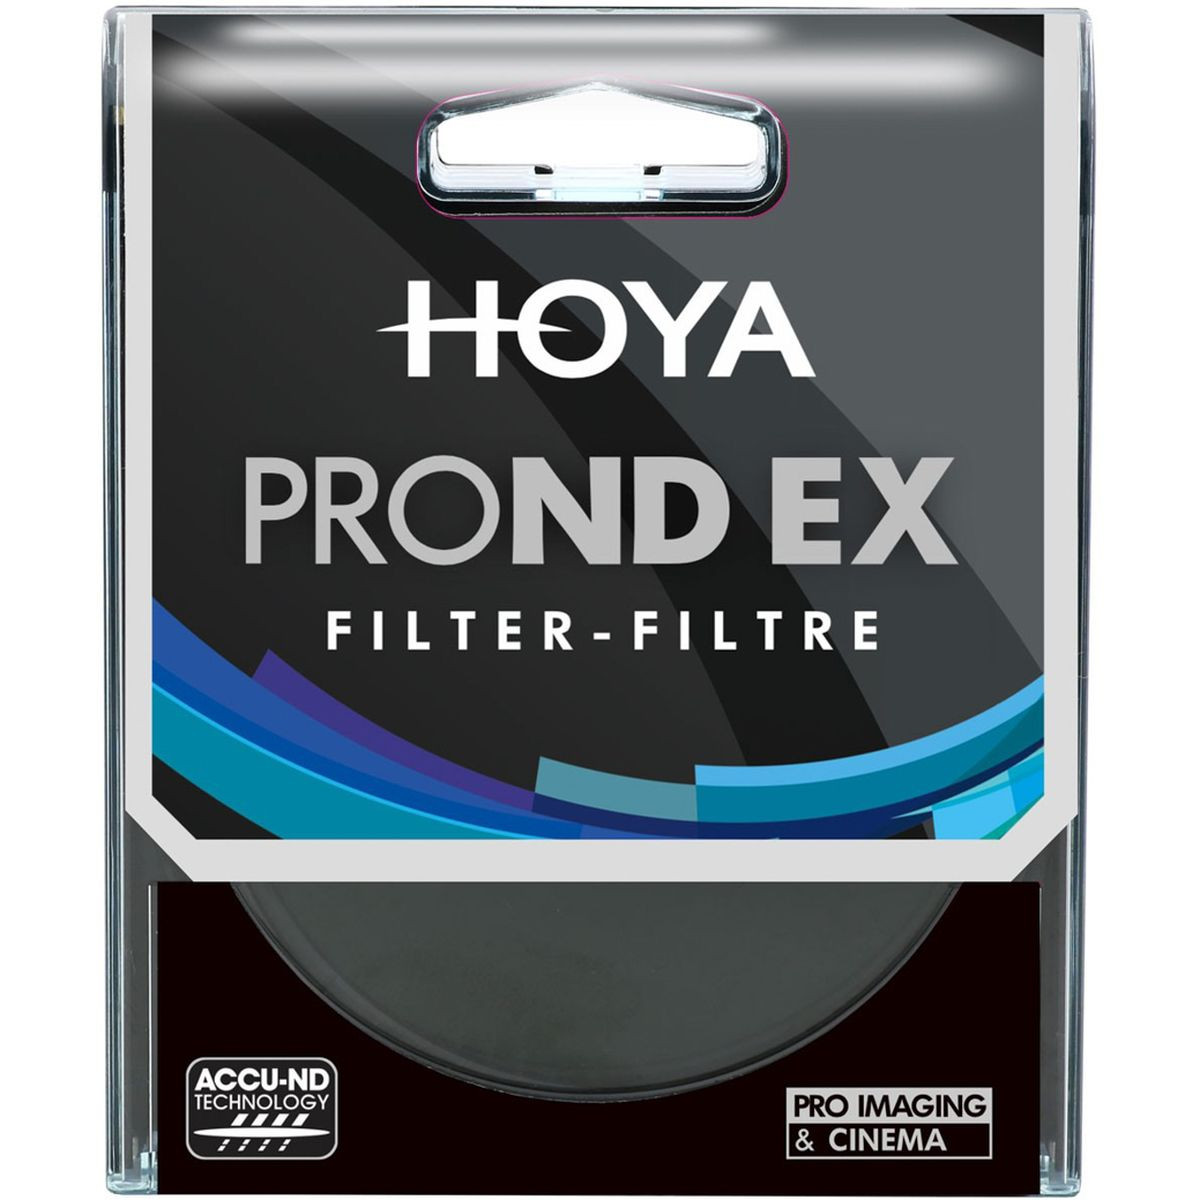 Hoya 62.0MM PROND EX 1000